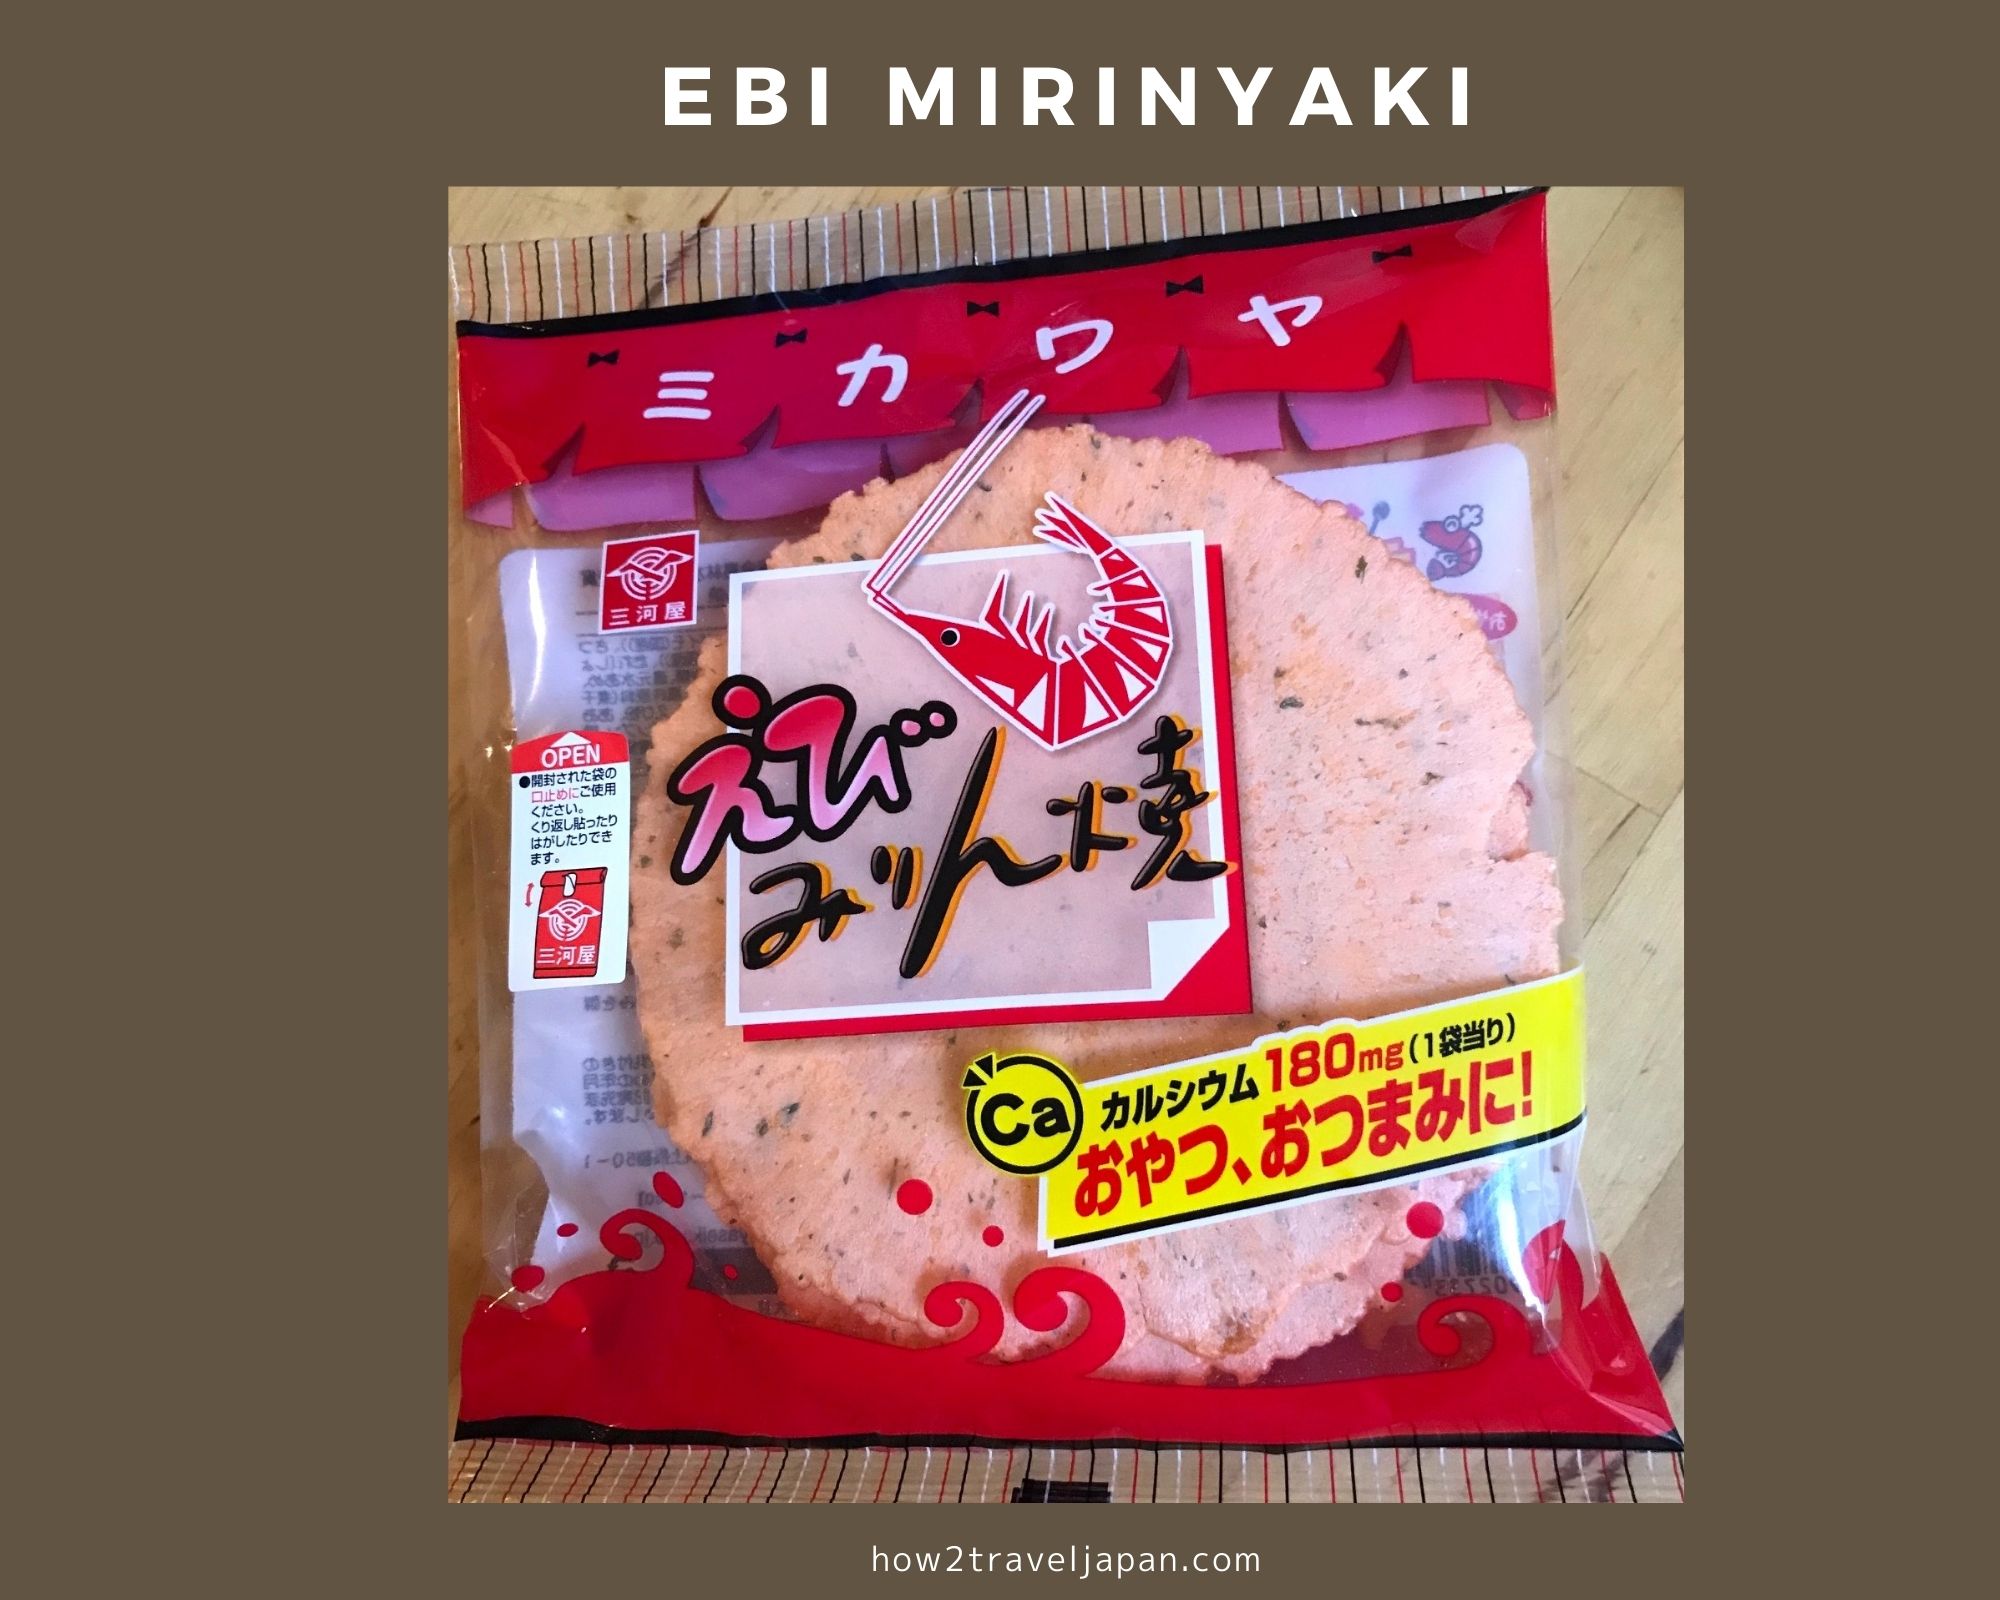 You are currently viewing Ebi Mirinyaki from Mikawaya